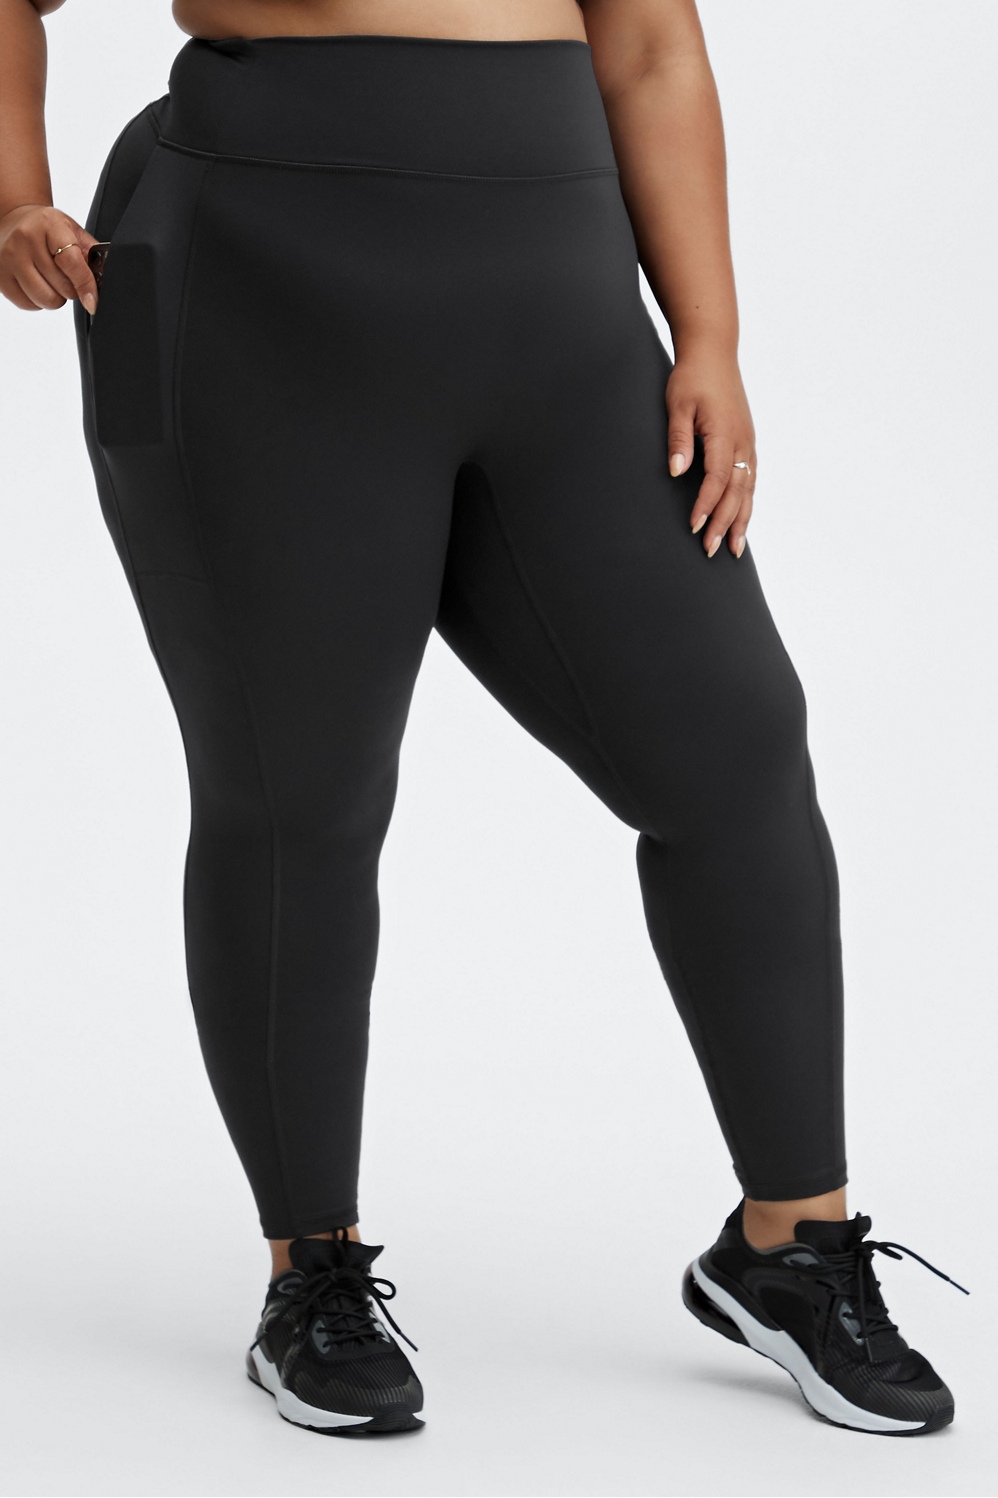 Buy QGGQDD 3 Pack Black High Waisted Leggings for Women - Soft Workout Yoga  Athletic Leggings, 01fleece-black/ Black Printed/ Dark Grey Heather, Small- Medium at